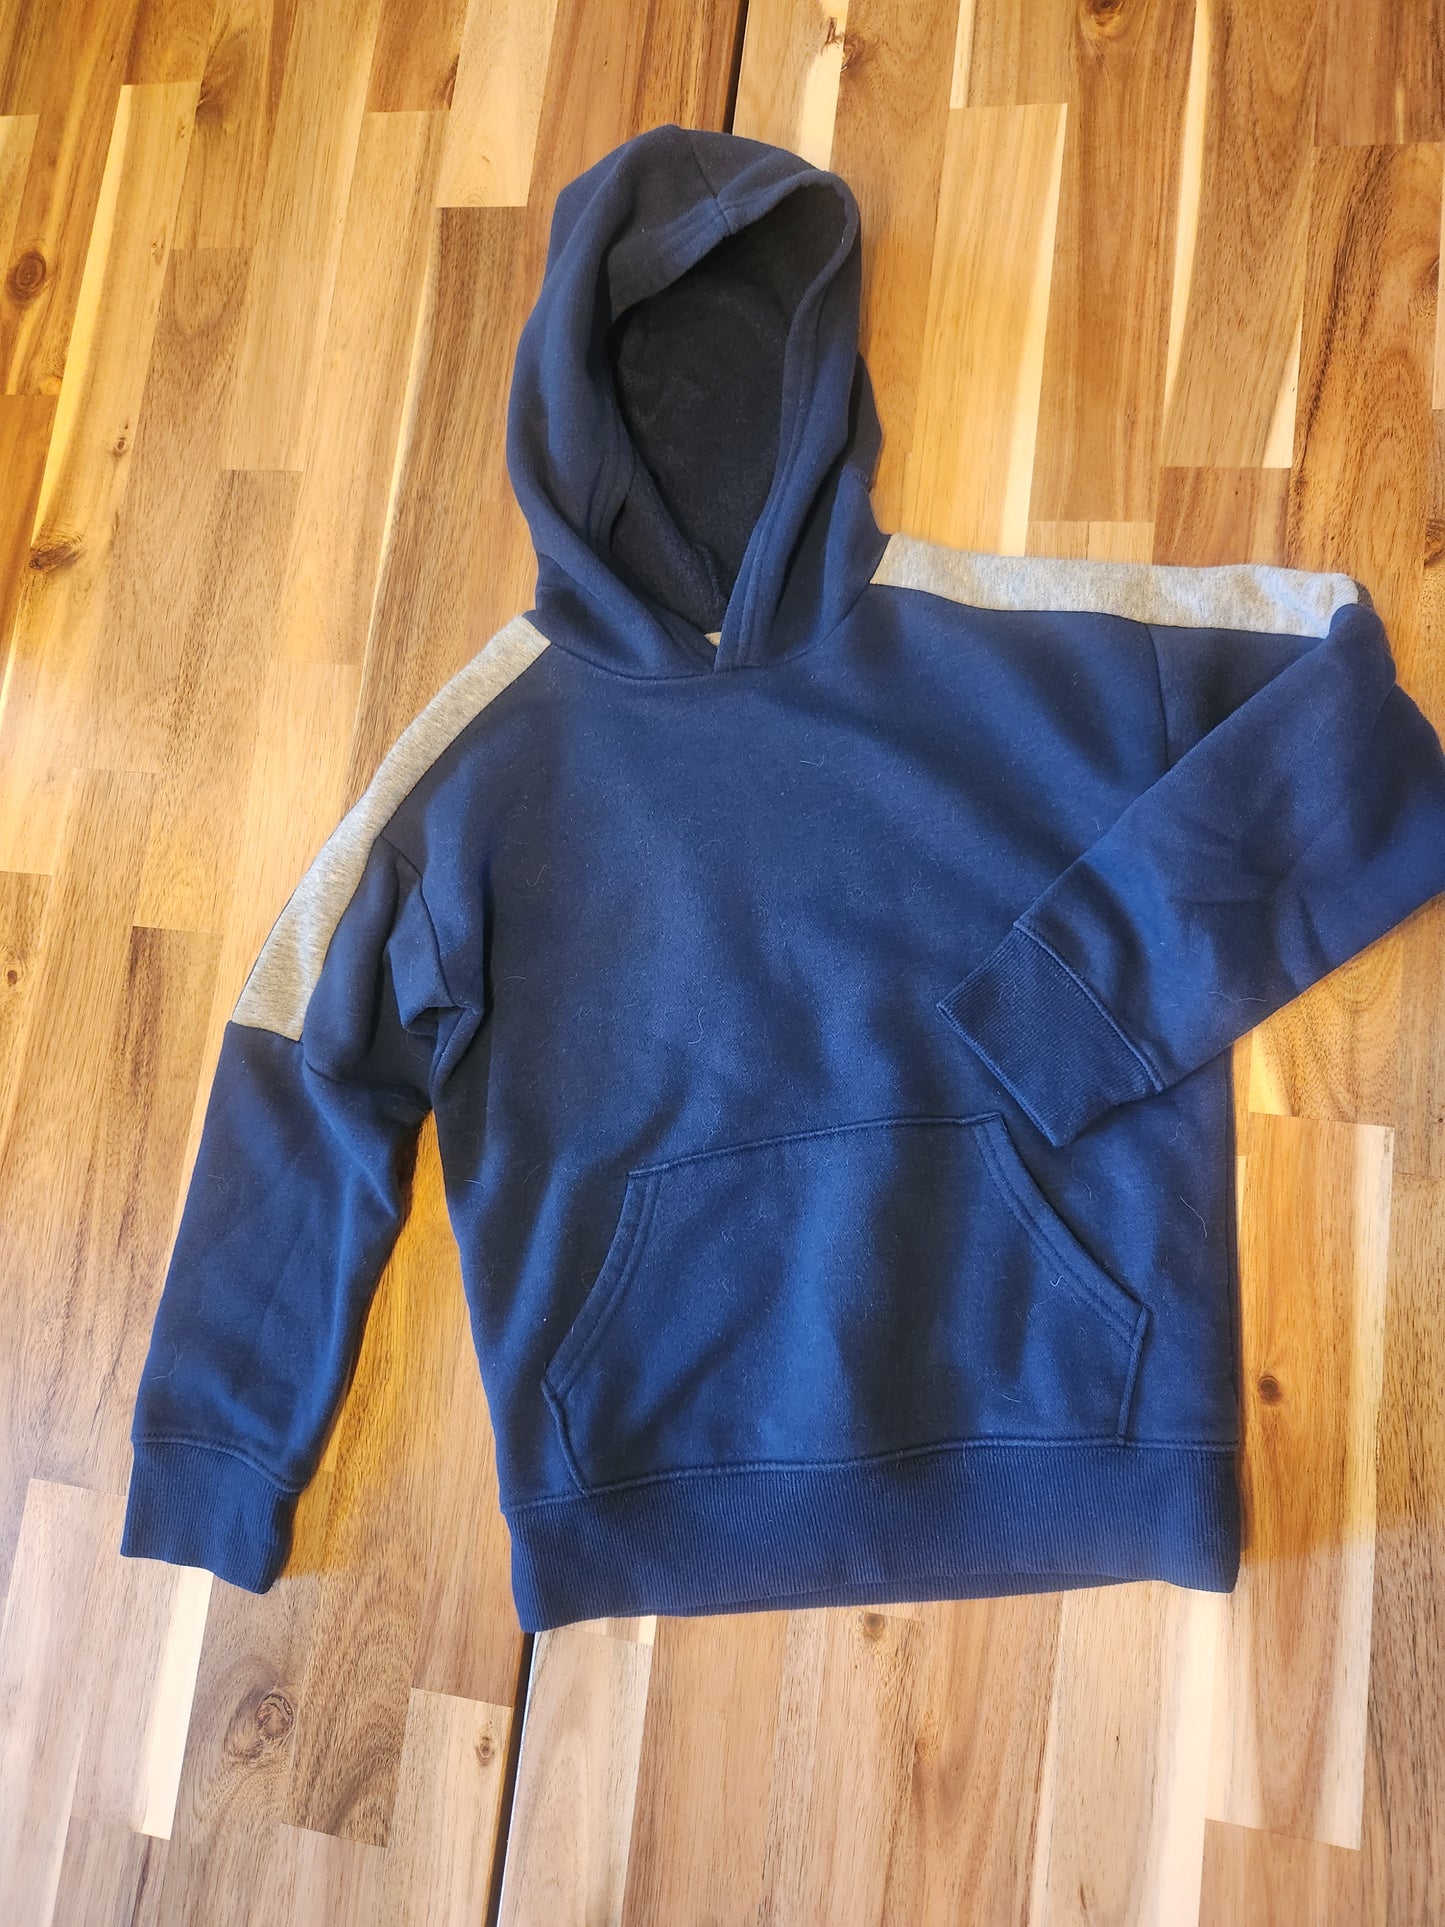 Boys hoodie size 6